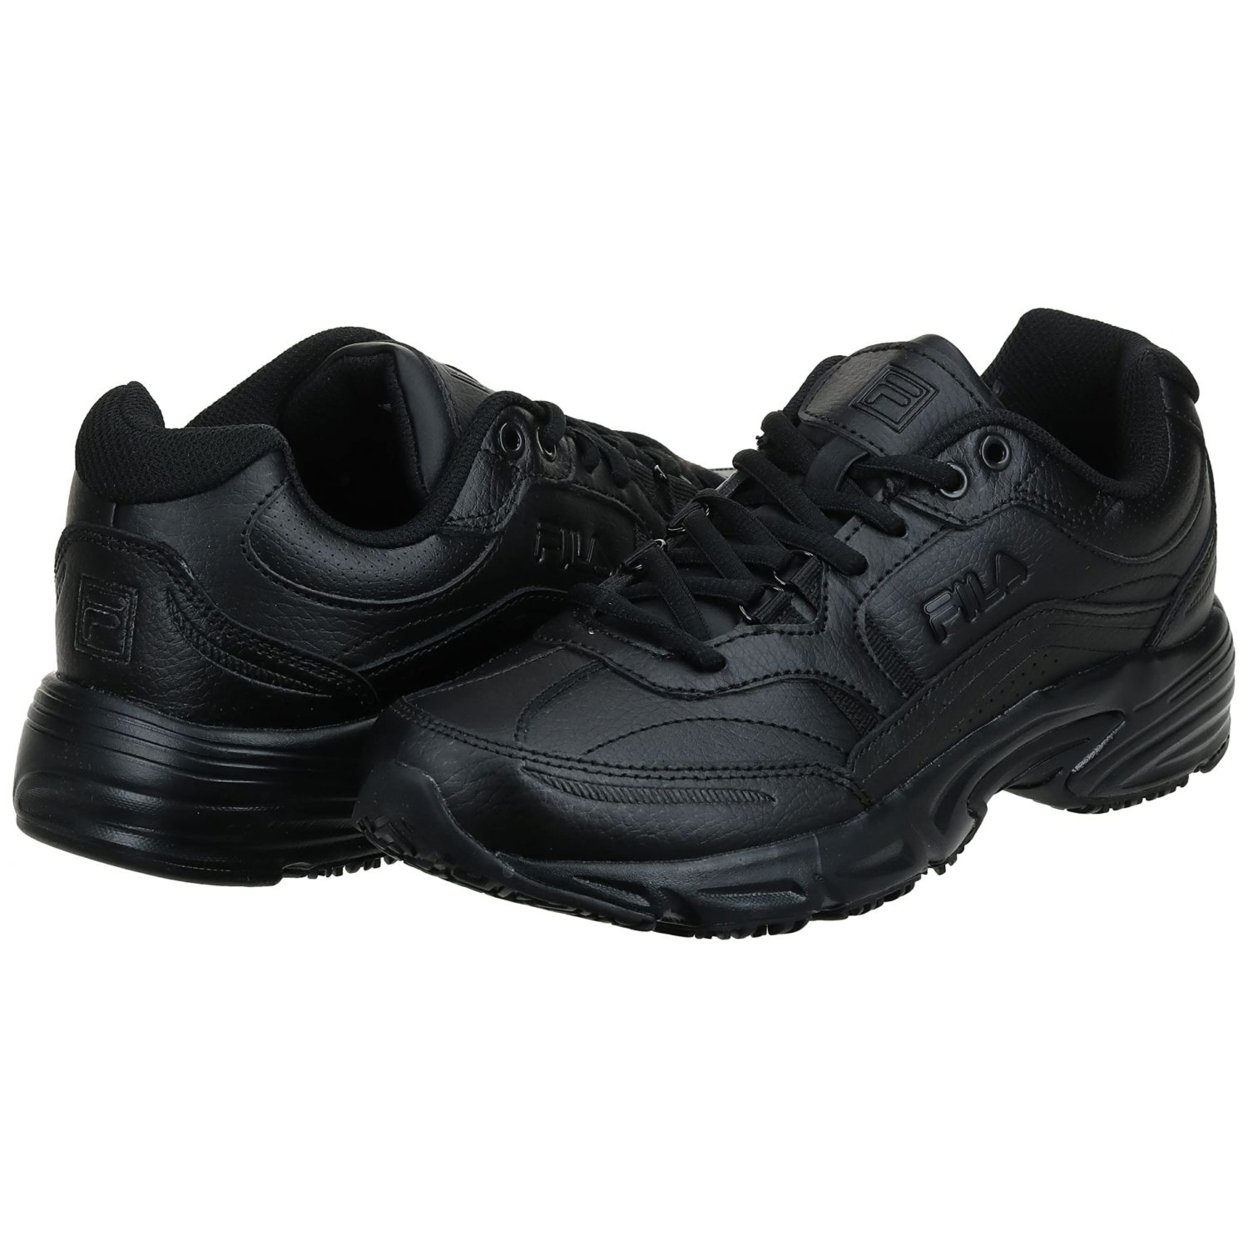 Fila Men's, Memory Workshift Slip Resistant Composite Toe Shoe - Wide Width BLK/BLK/BLK - Black (black 19-3911tcx), 6.5 Wide